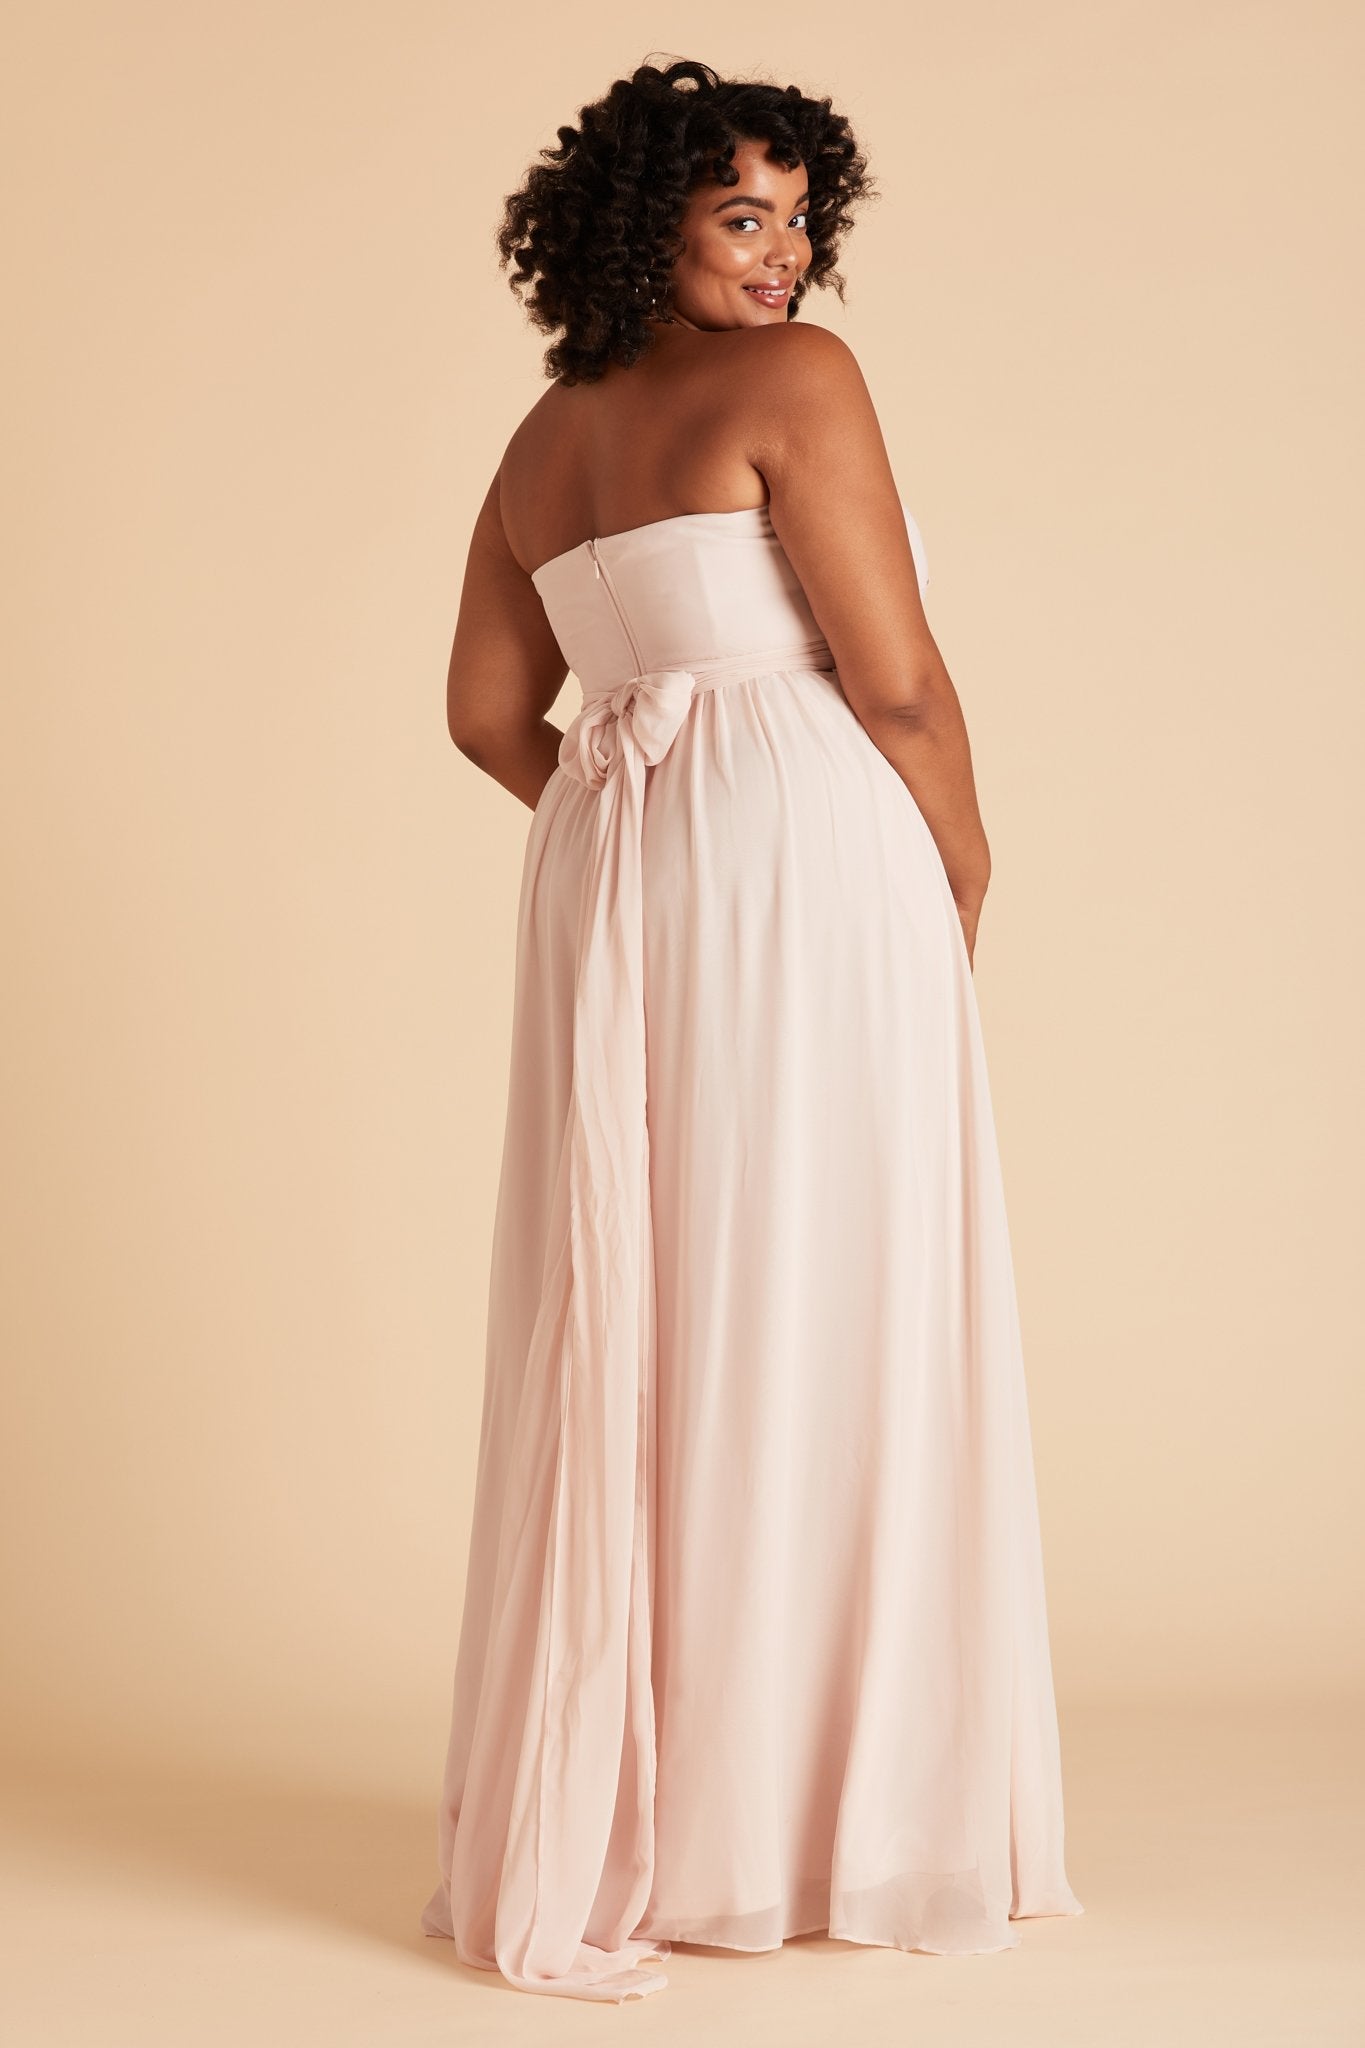 Grace convertible plus size bridesmaid dress in pale blush pink chiffon by Birdy Grey, back view